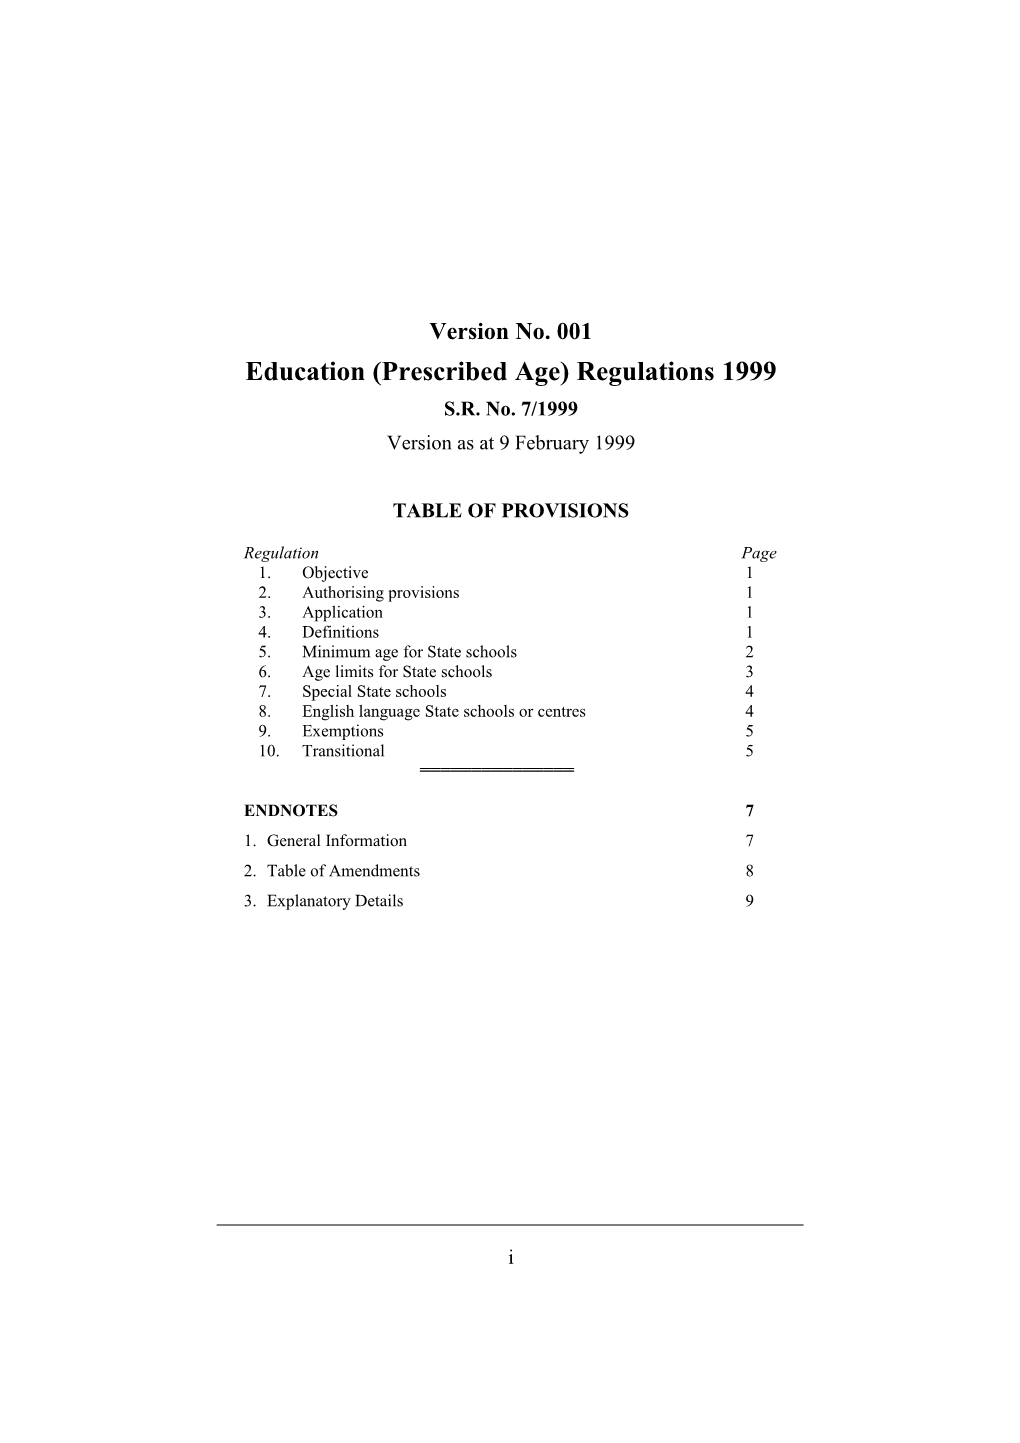 Education (Prescribed Age) Regulations 1999